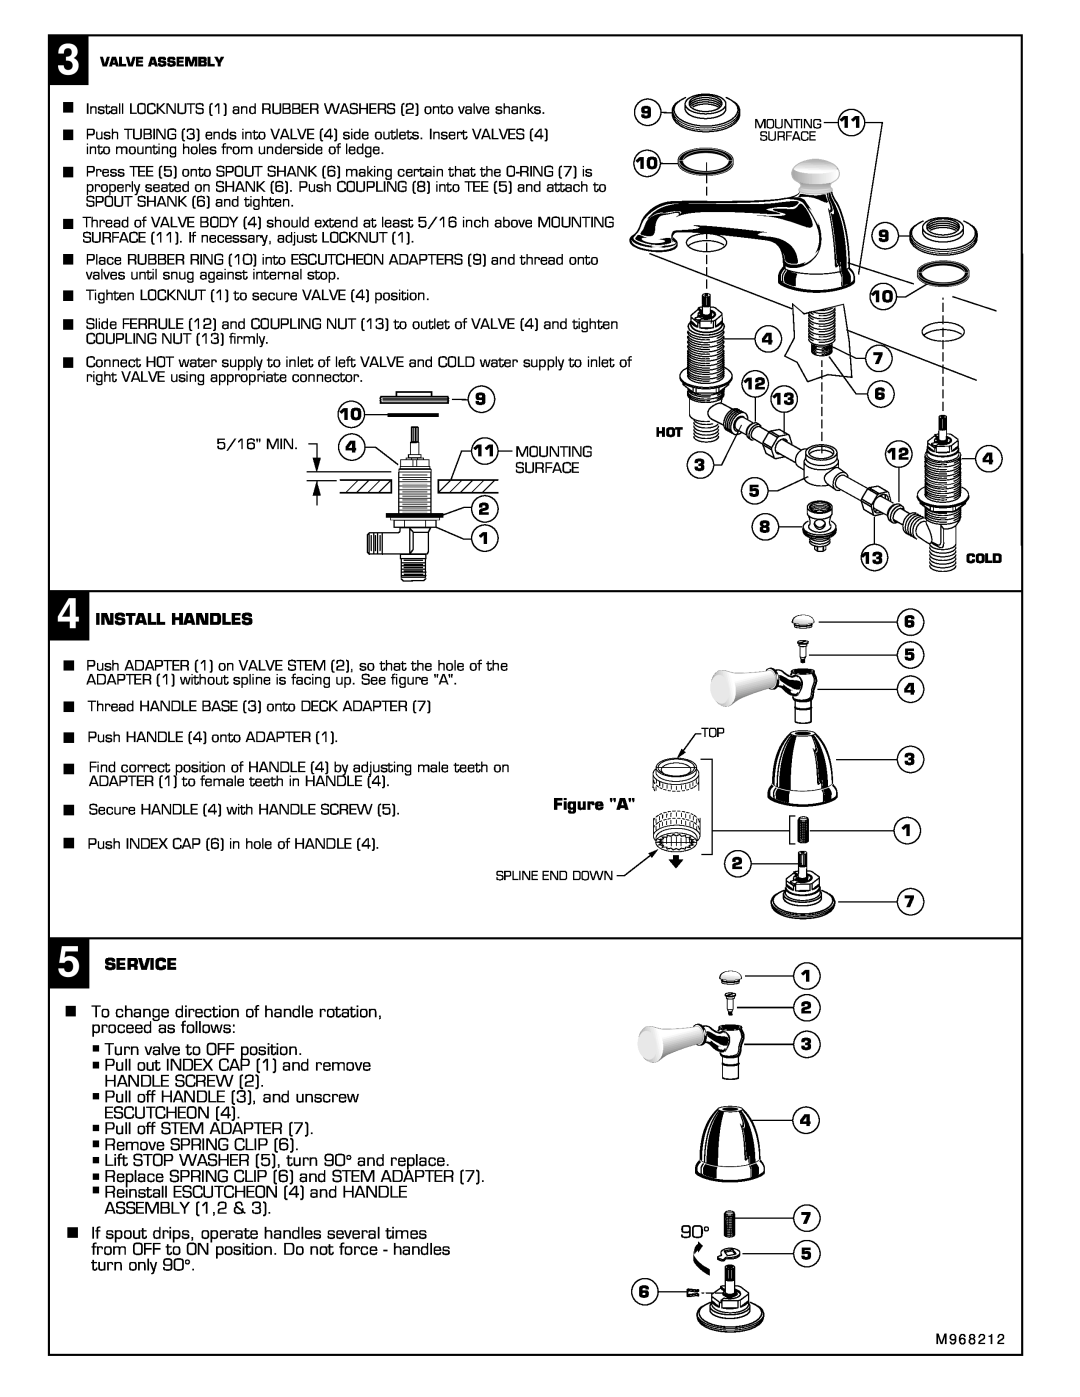 American Standard 2980, 2981 installation instructions Install Handles, Figure A, Service, 1 2 